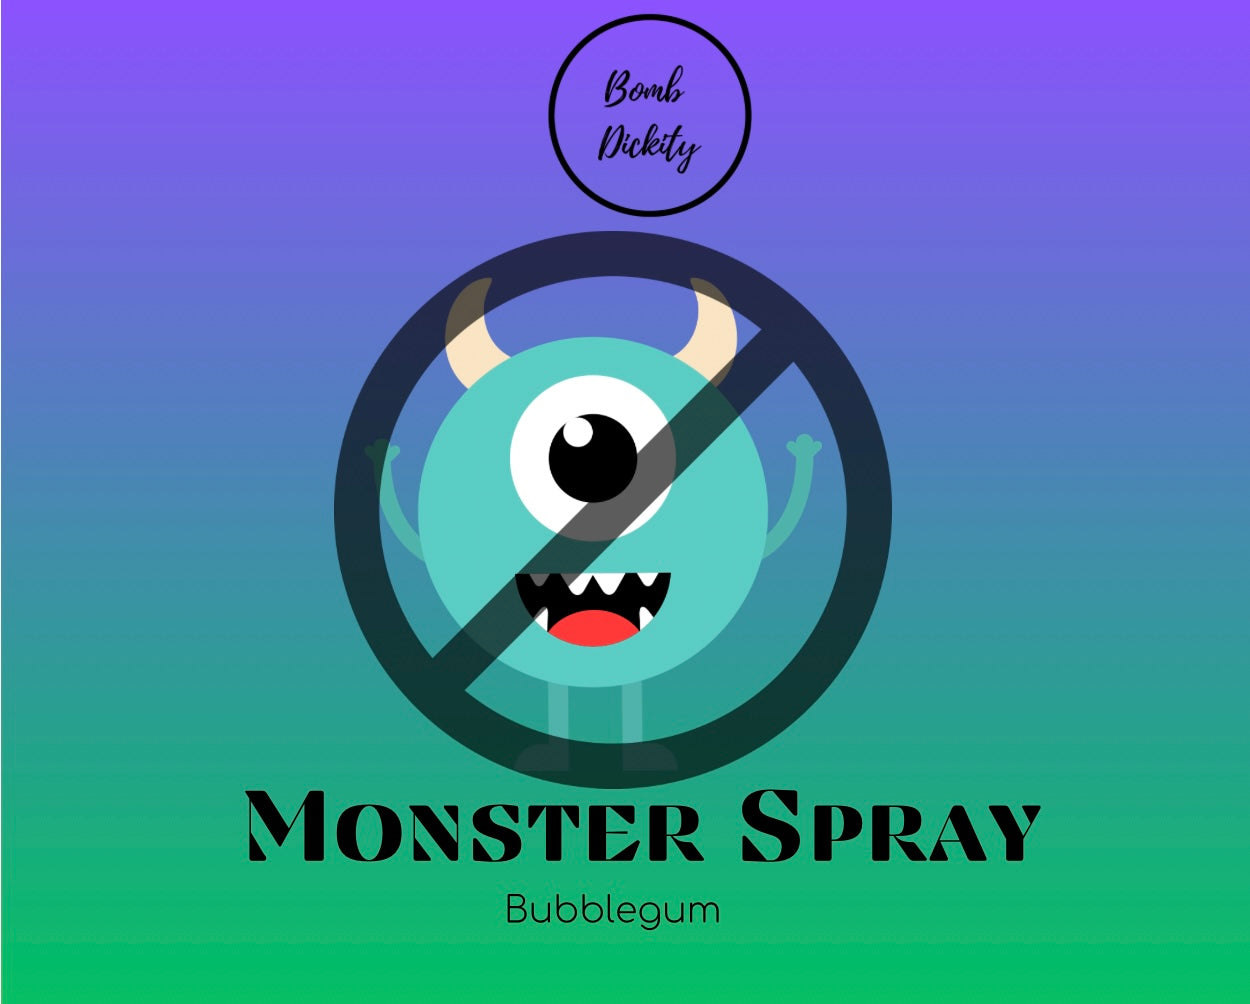 Monster spray